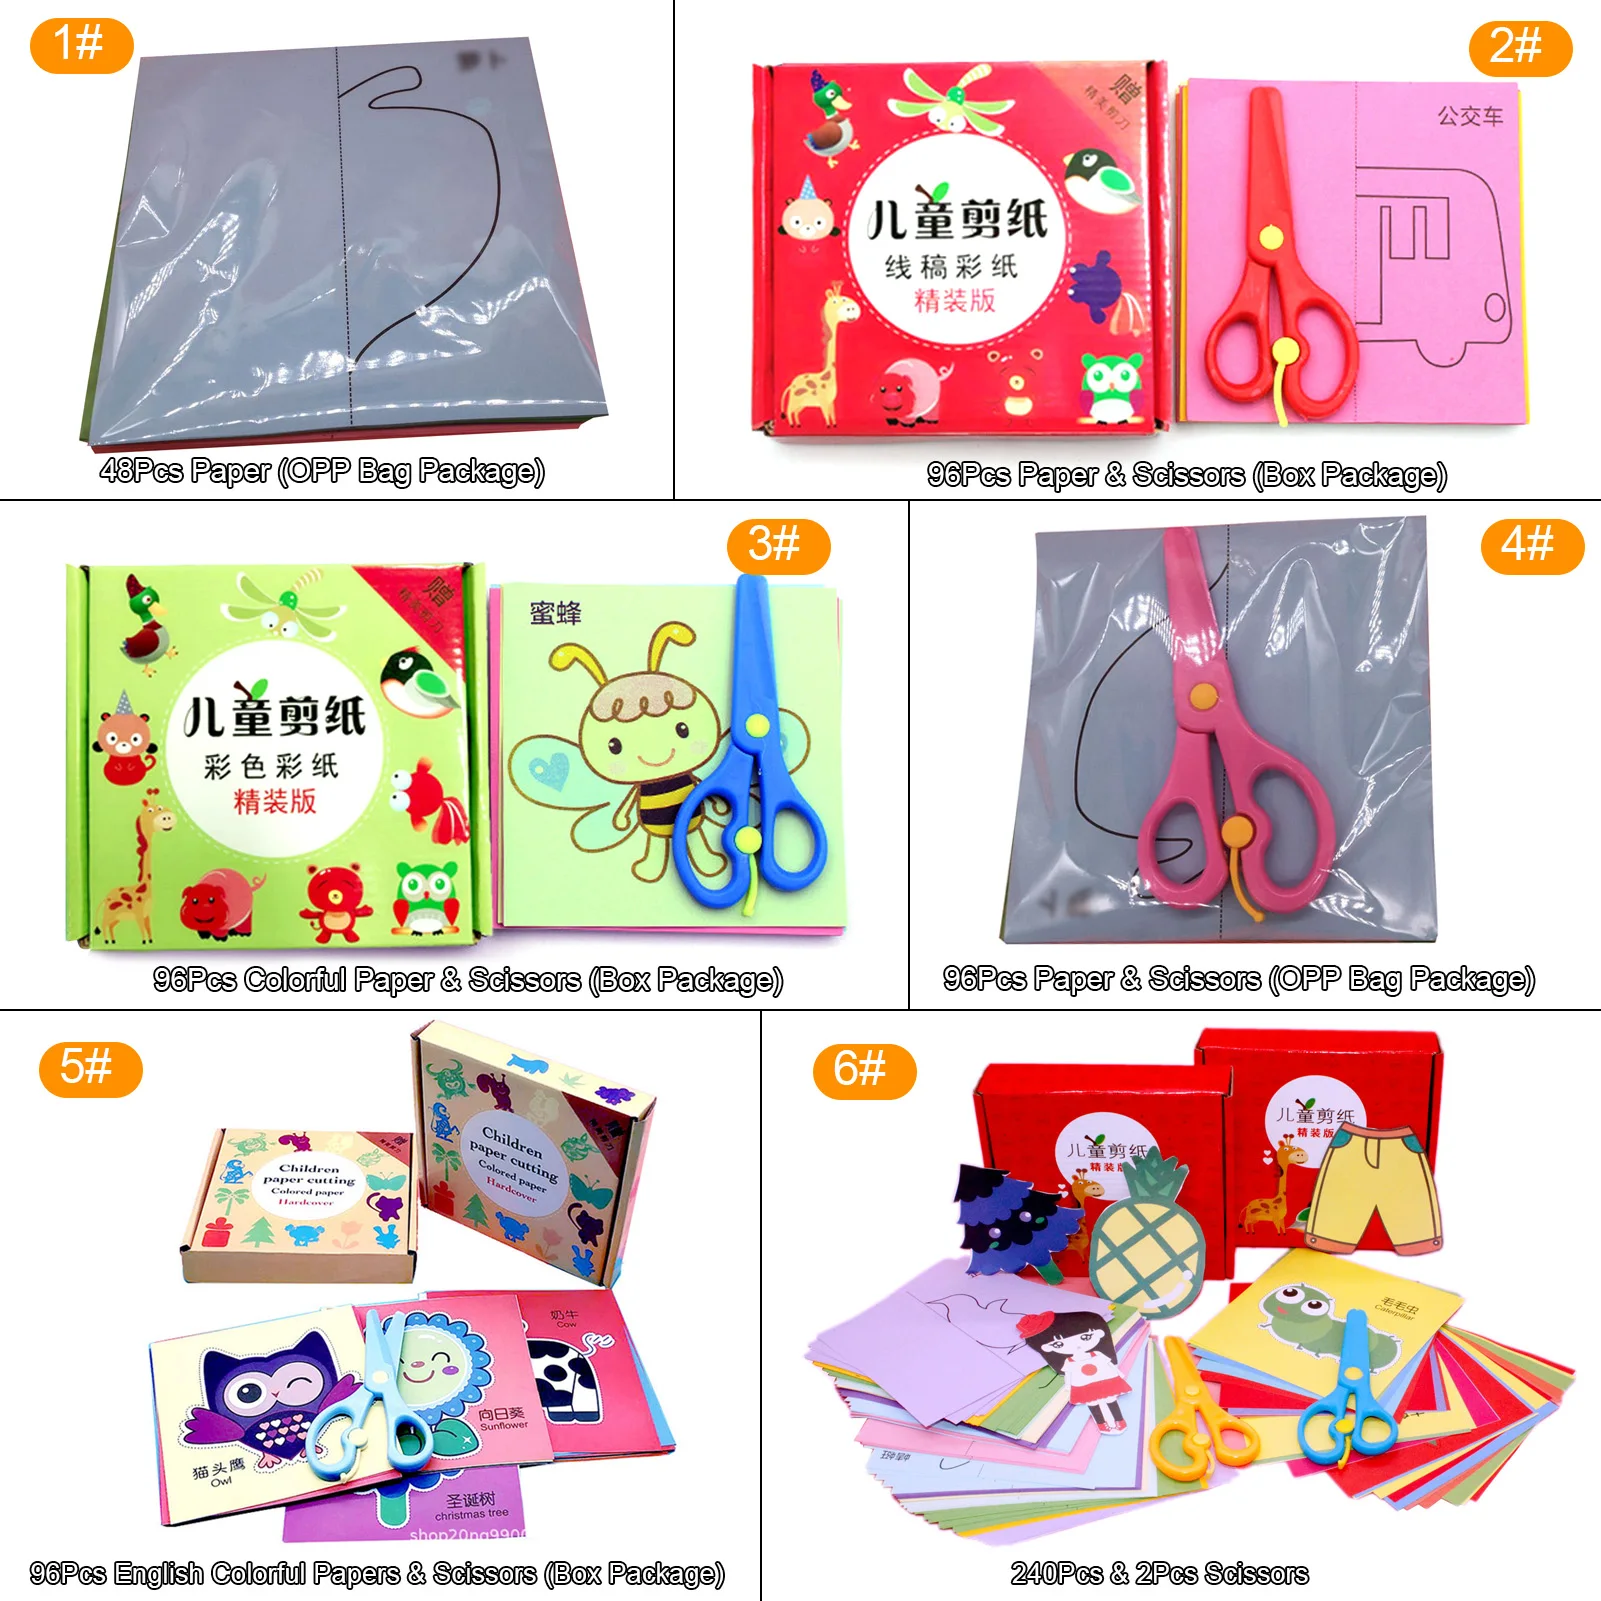 https://ae01.alicdn.com/kf/H1852c41fbcaa4fa28daeaa1f9a8fb09fs/DIY-Toys-Children-Safety-Scissors-Set-Preschooler-Training-Scissors-Kindergarten-Kids-Paper-Cut-DIY-Art-Craft.jpg